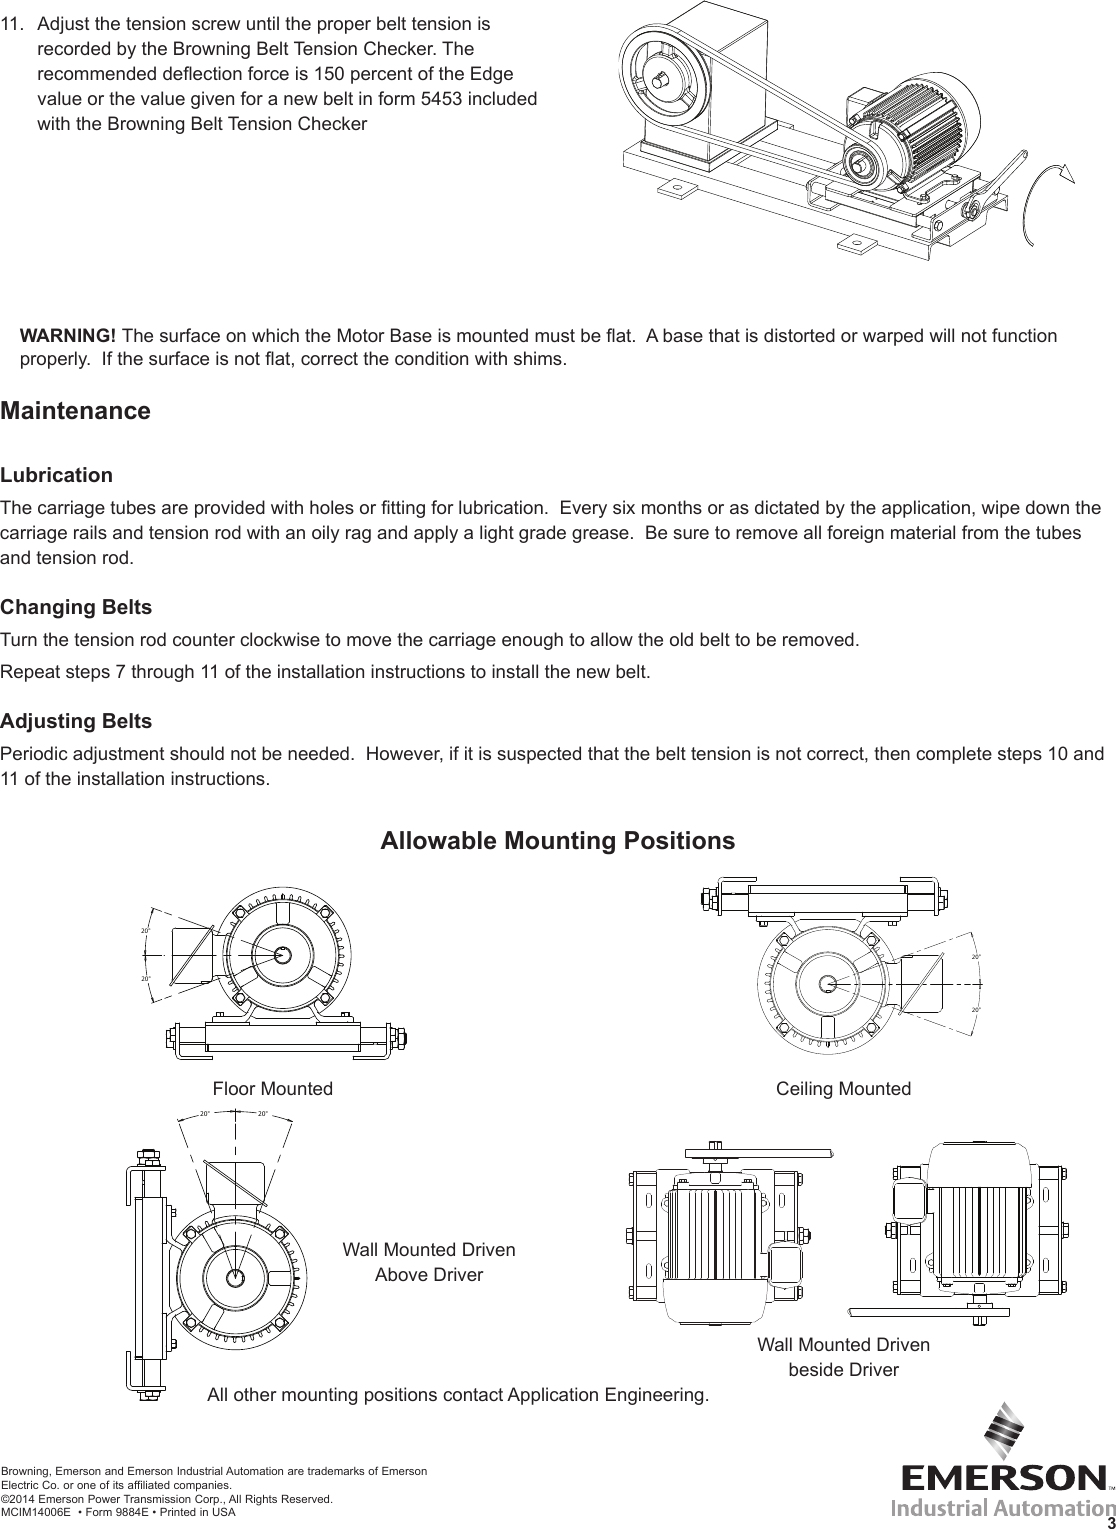 Page 3 of 3 - Emerson 600 MCIM14006E 9884E Browning Standard Motor Base Instruction And Maintenance Manual R7 User  3ea79e69-f2b6-4e2c-a632-3aa8b88f8b5f